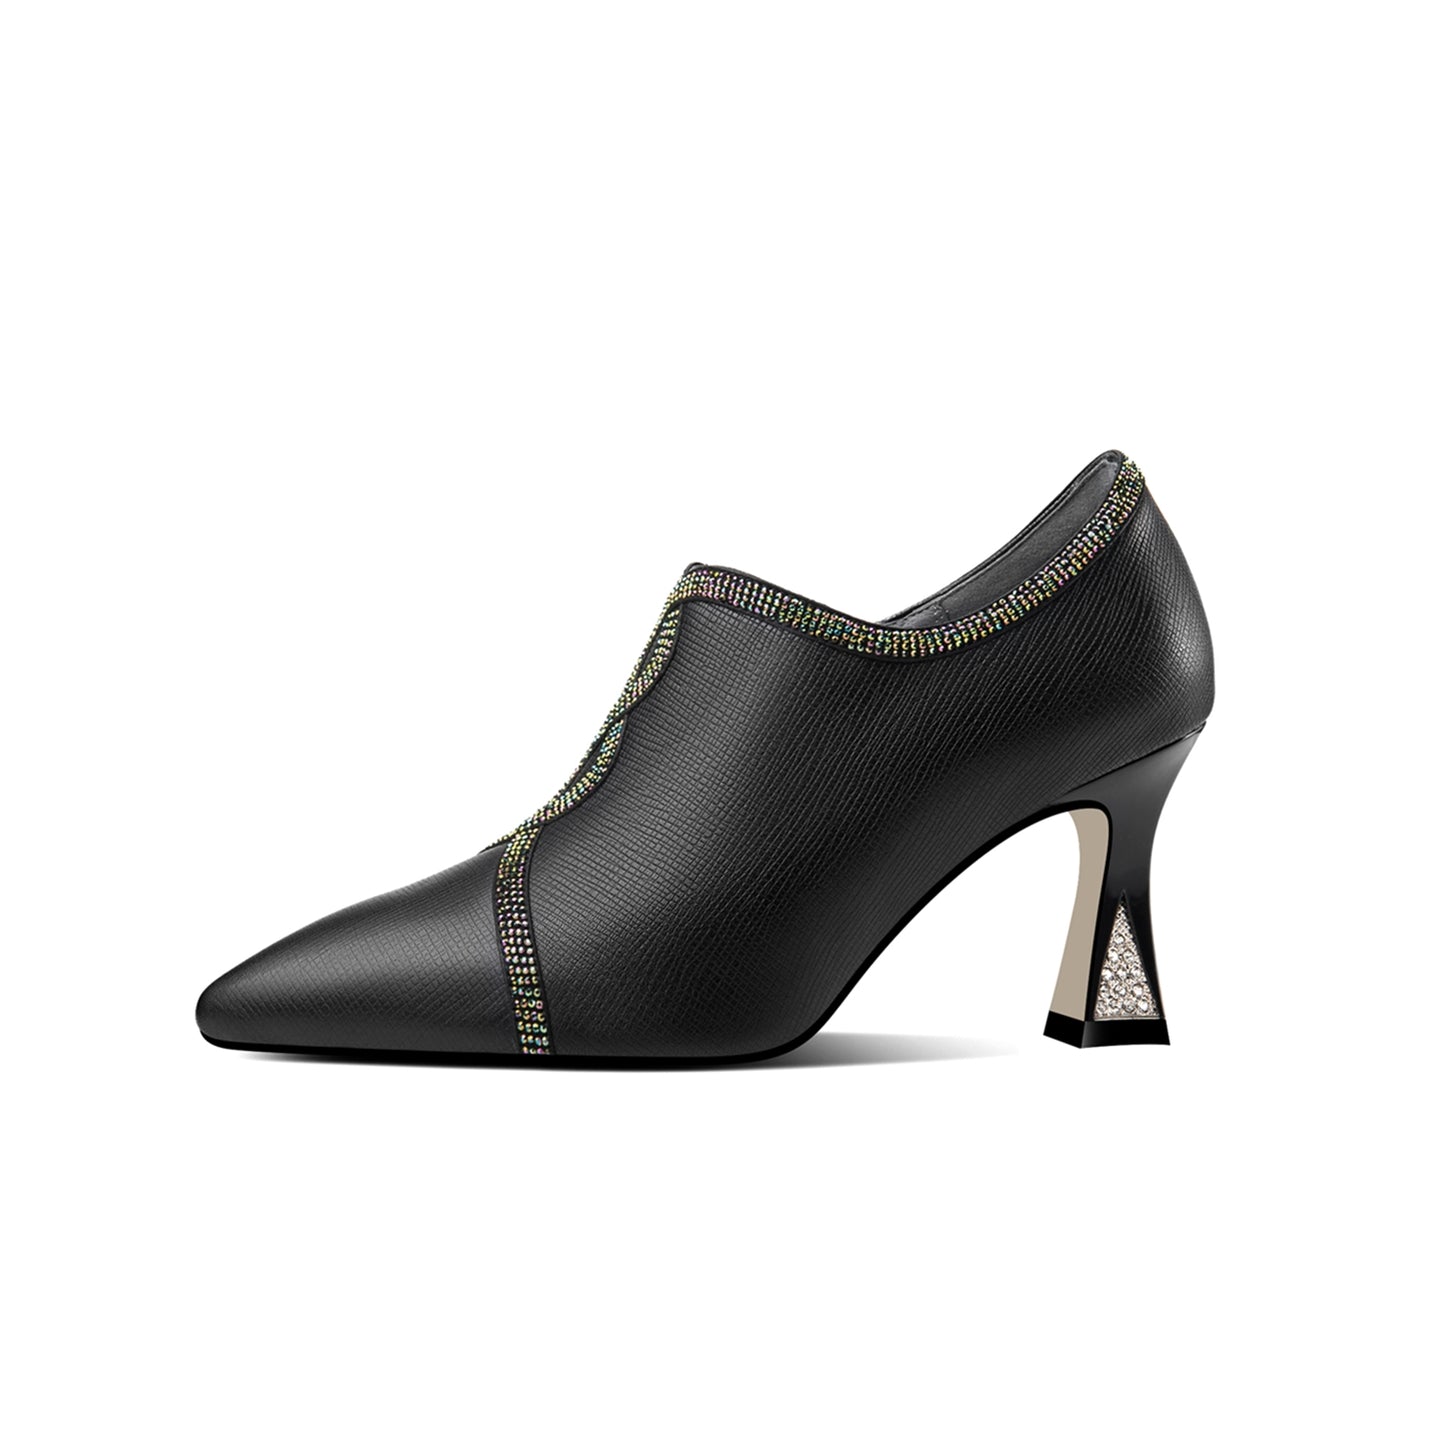 TinaCus Women's Handmade Genuine Leather High Heel Side Zip Up Glitter Pumps